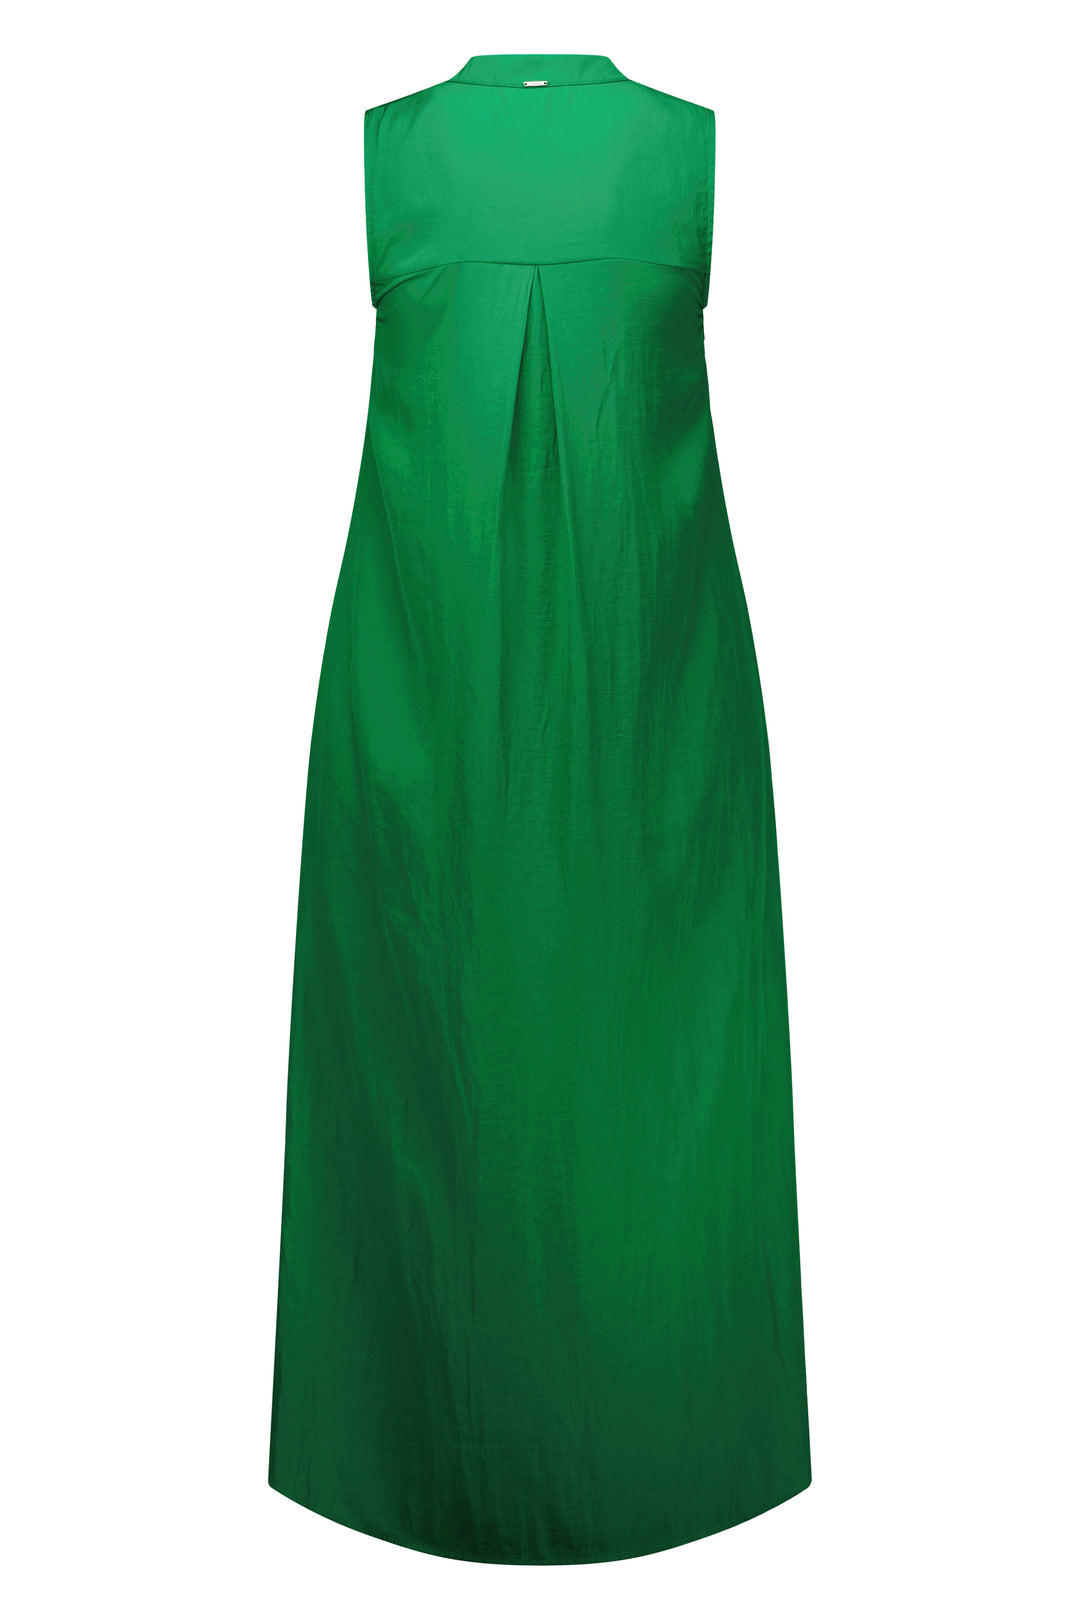 Glide by Verge - Rotate Dress - Emerald - VERGE